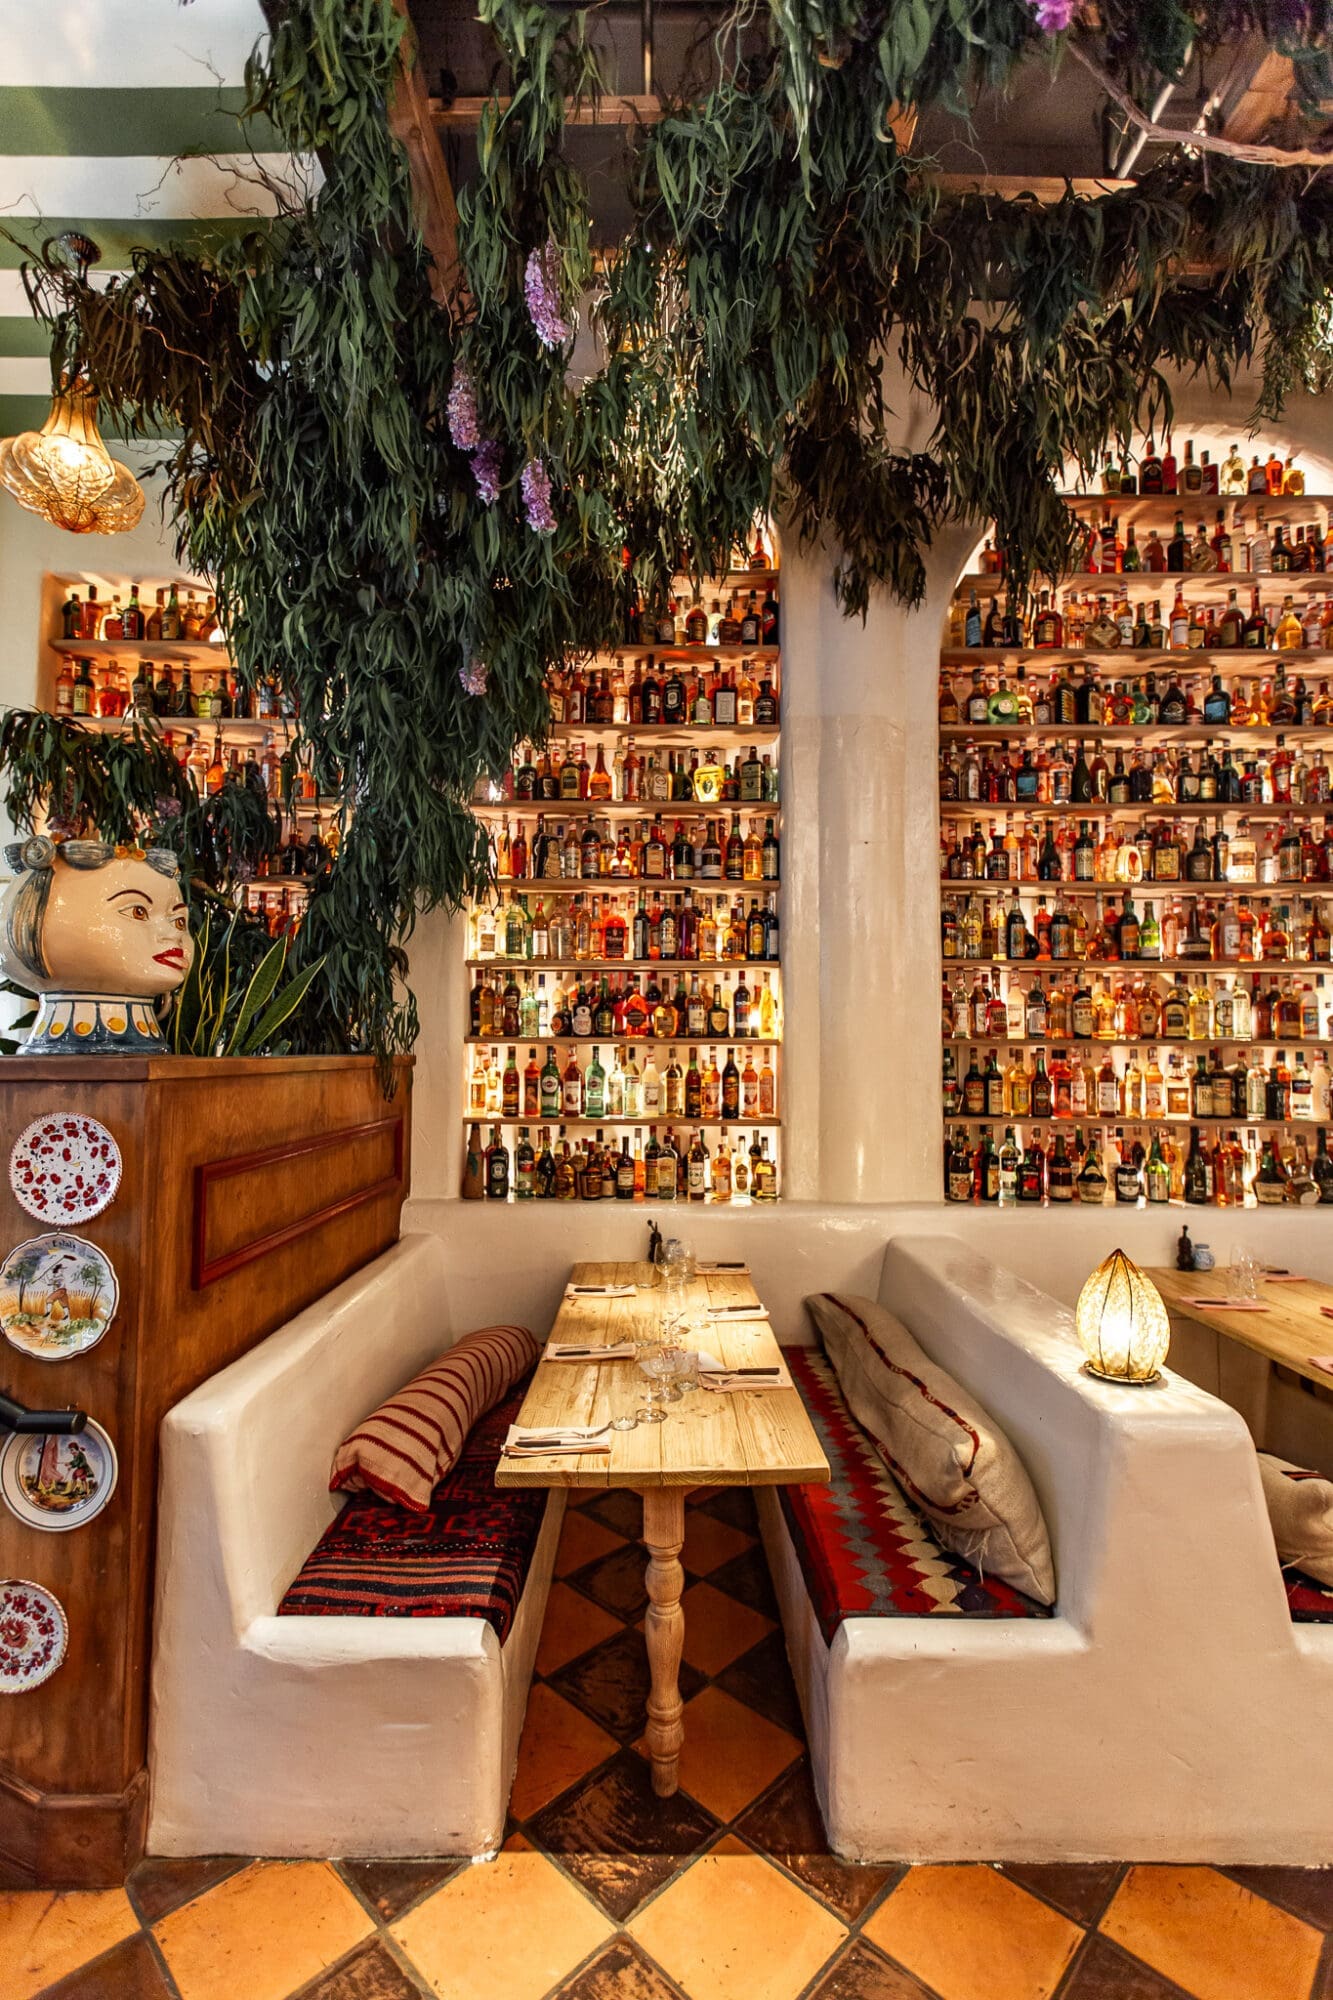 10 of the Best Instagrammable Restaurants in London